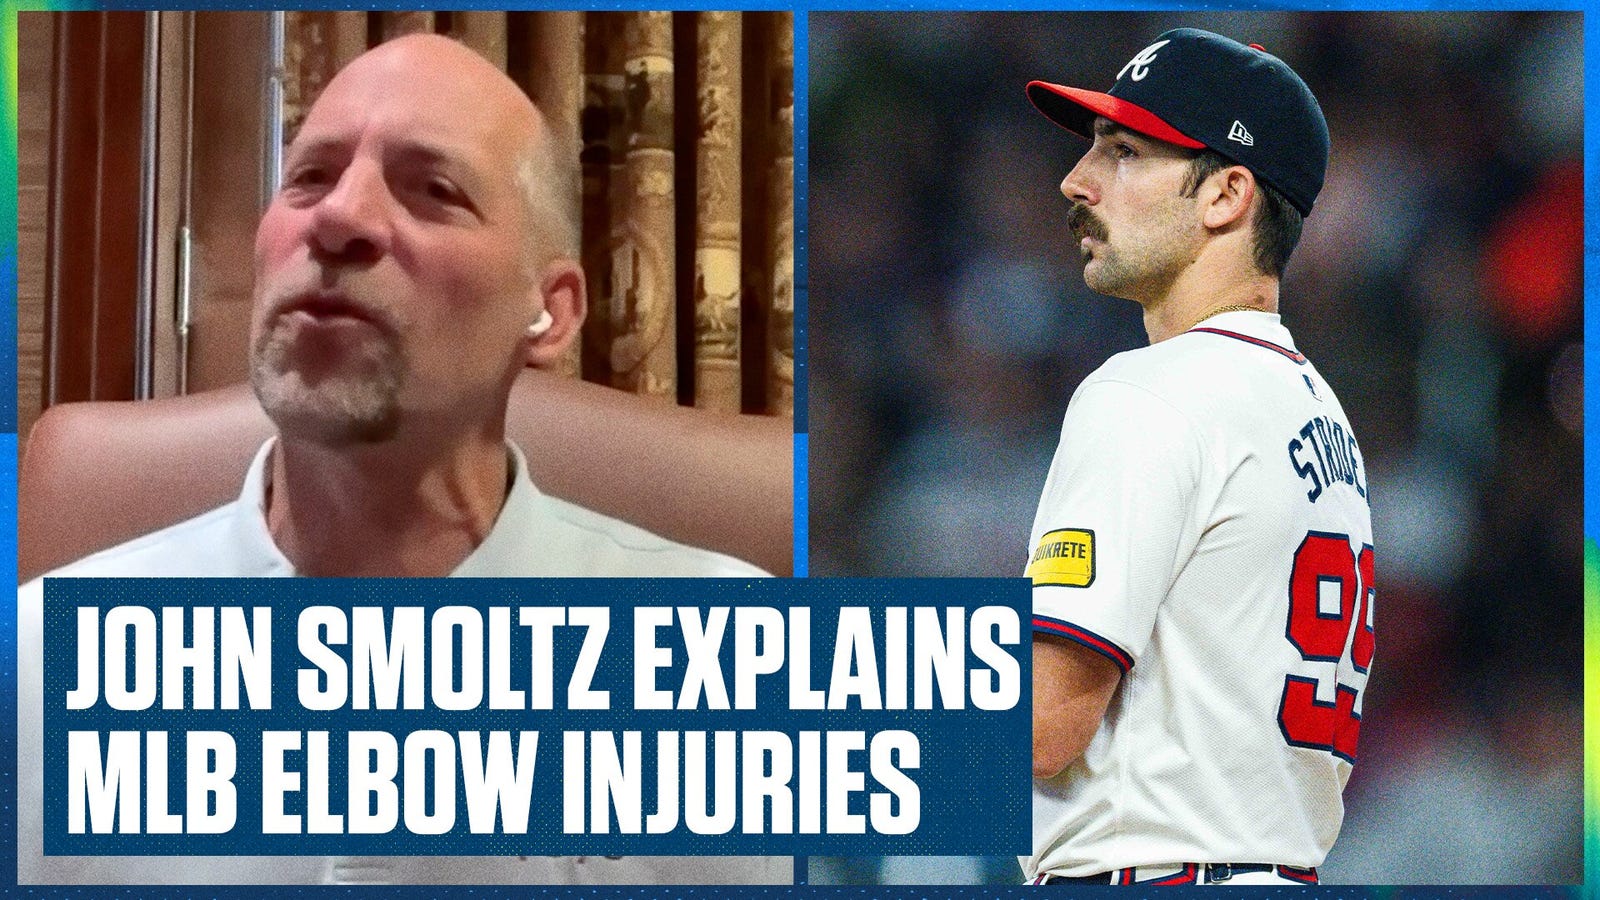 John Smoltz explains why MLB's top pitchers keep getting hurt